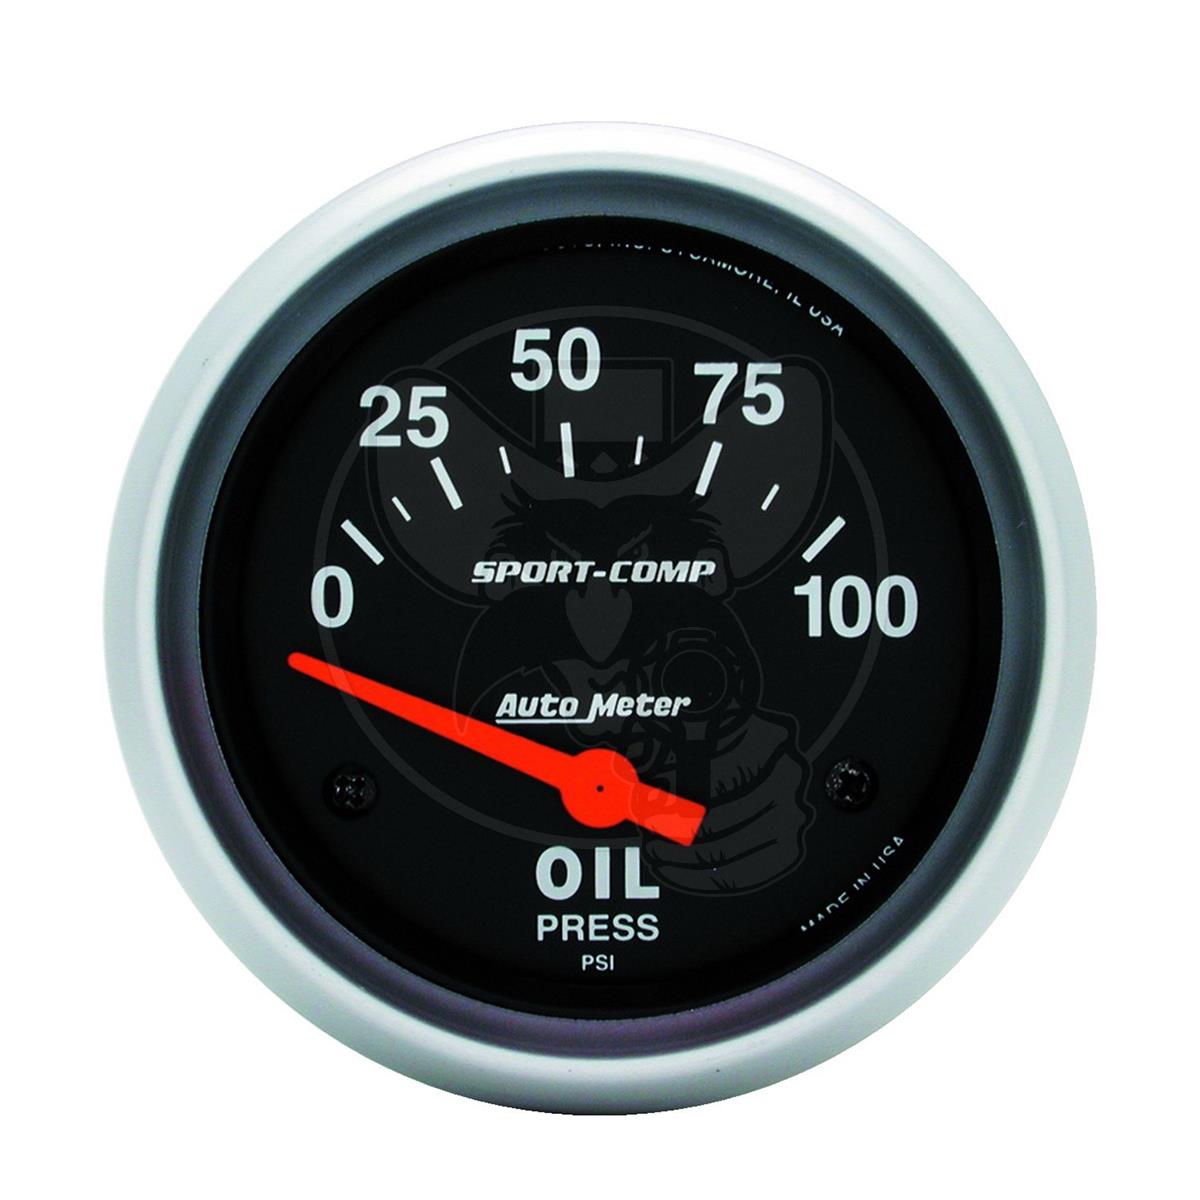 Auto Meter 3522 Sport-Comp Electric Oil Pressure Gauge 